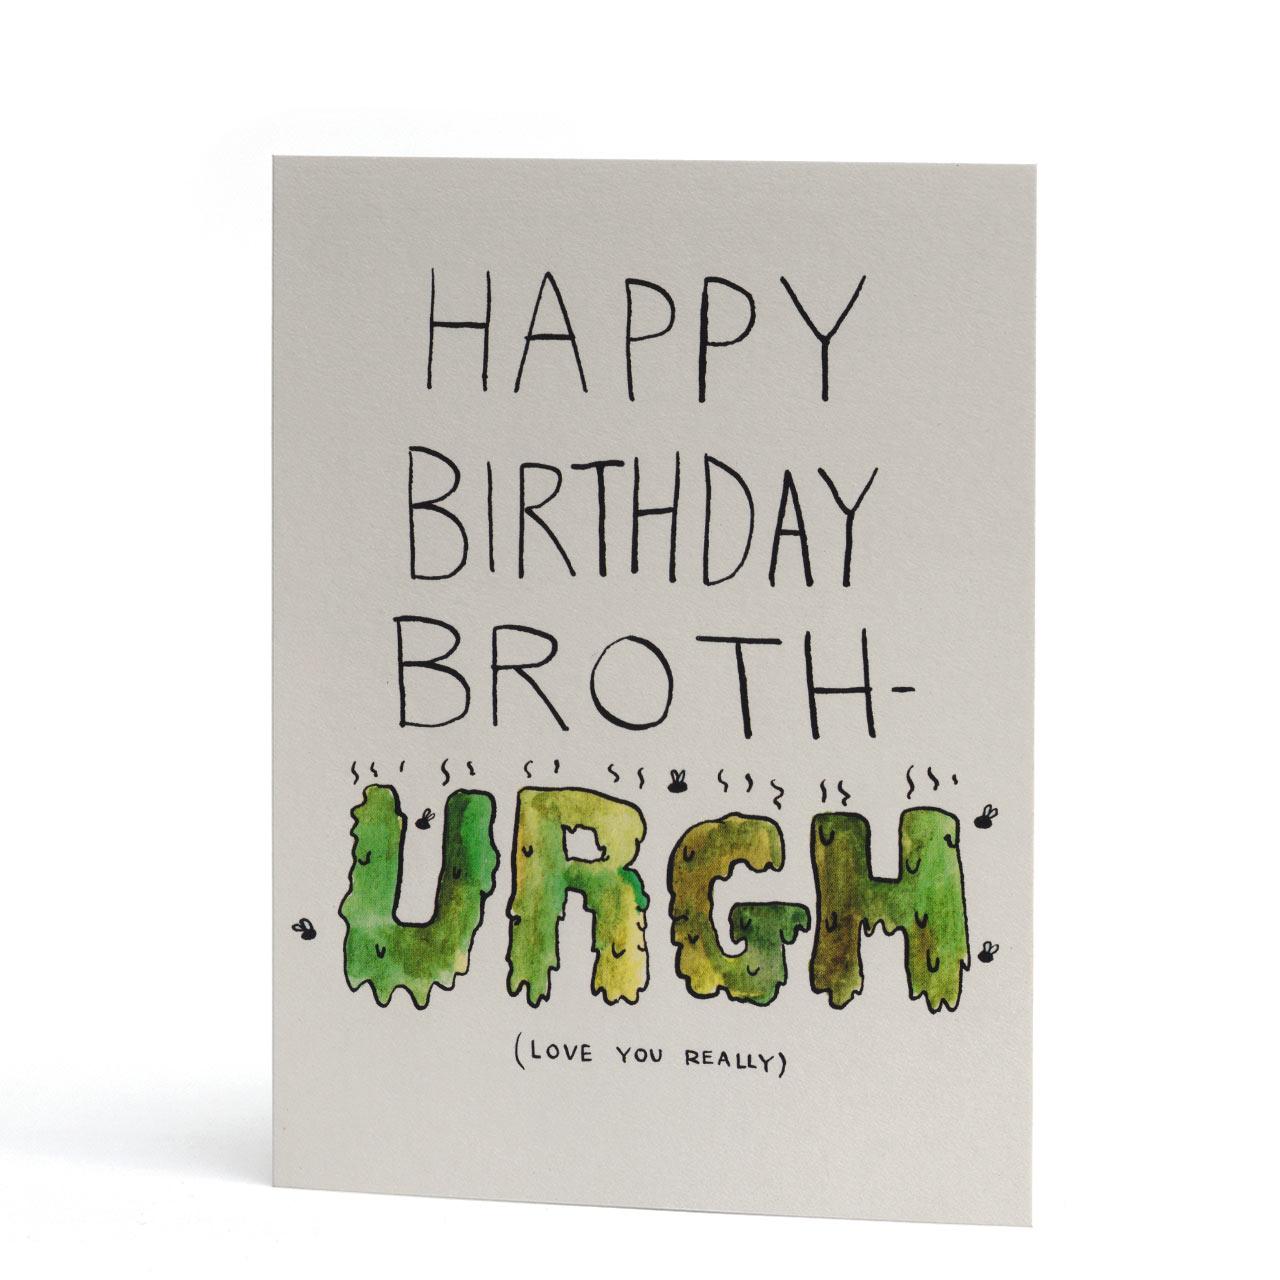 Broth-urgh Birthday Card